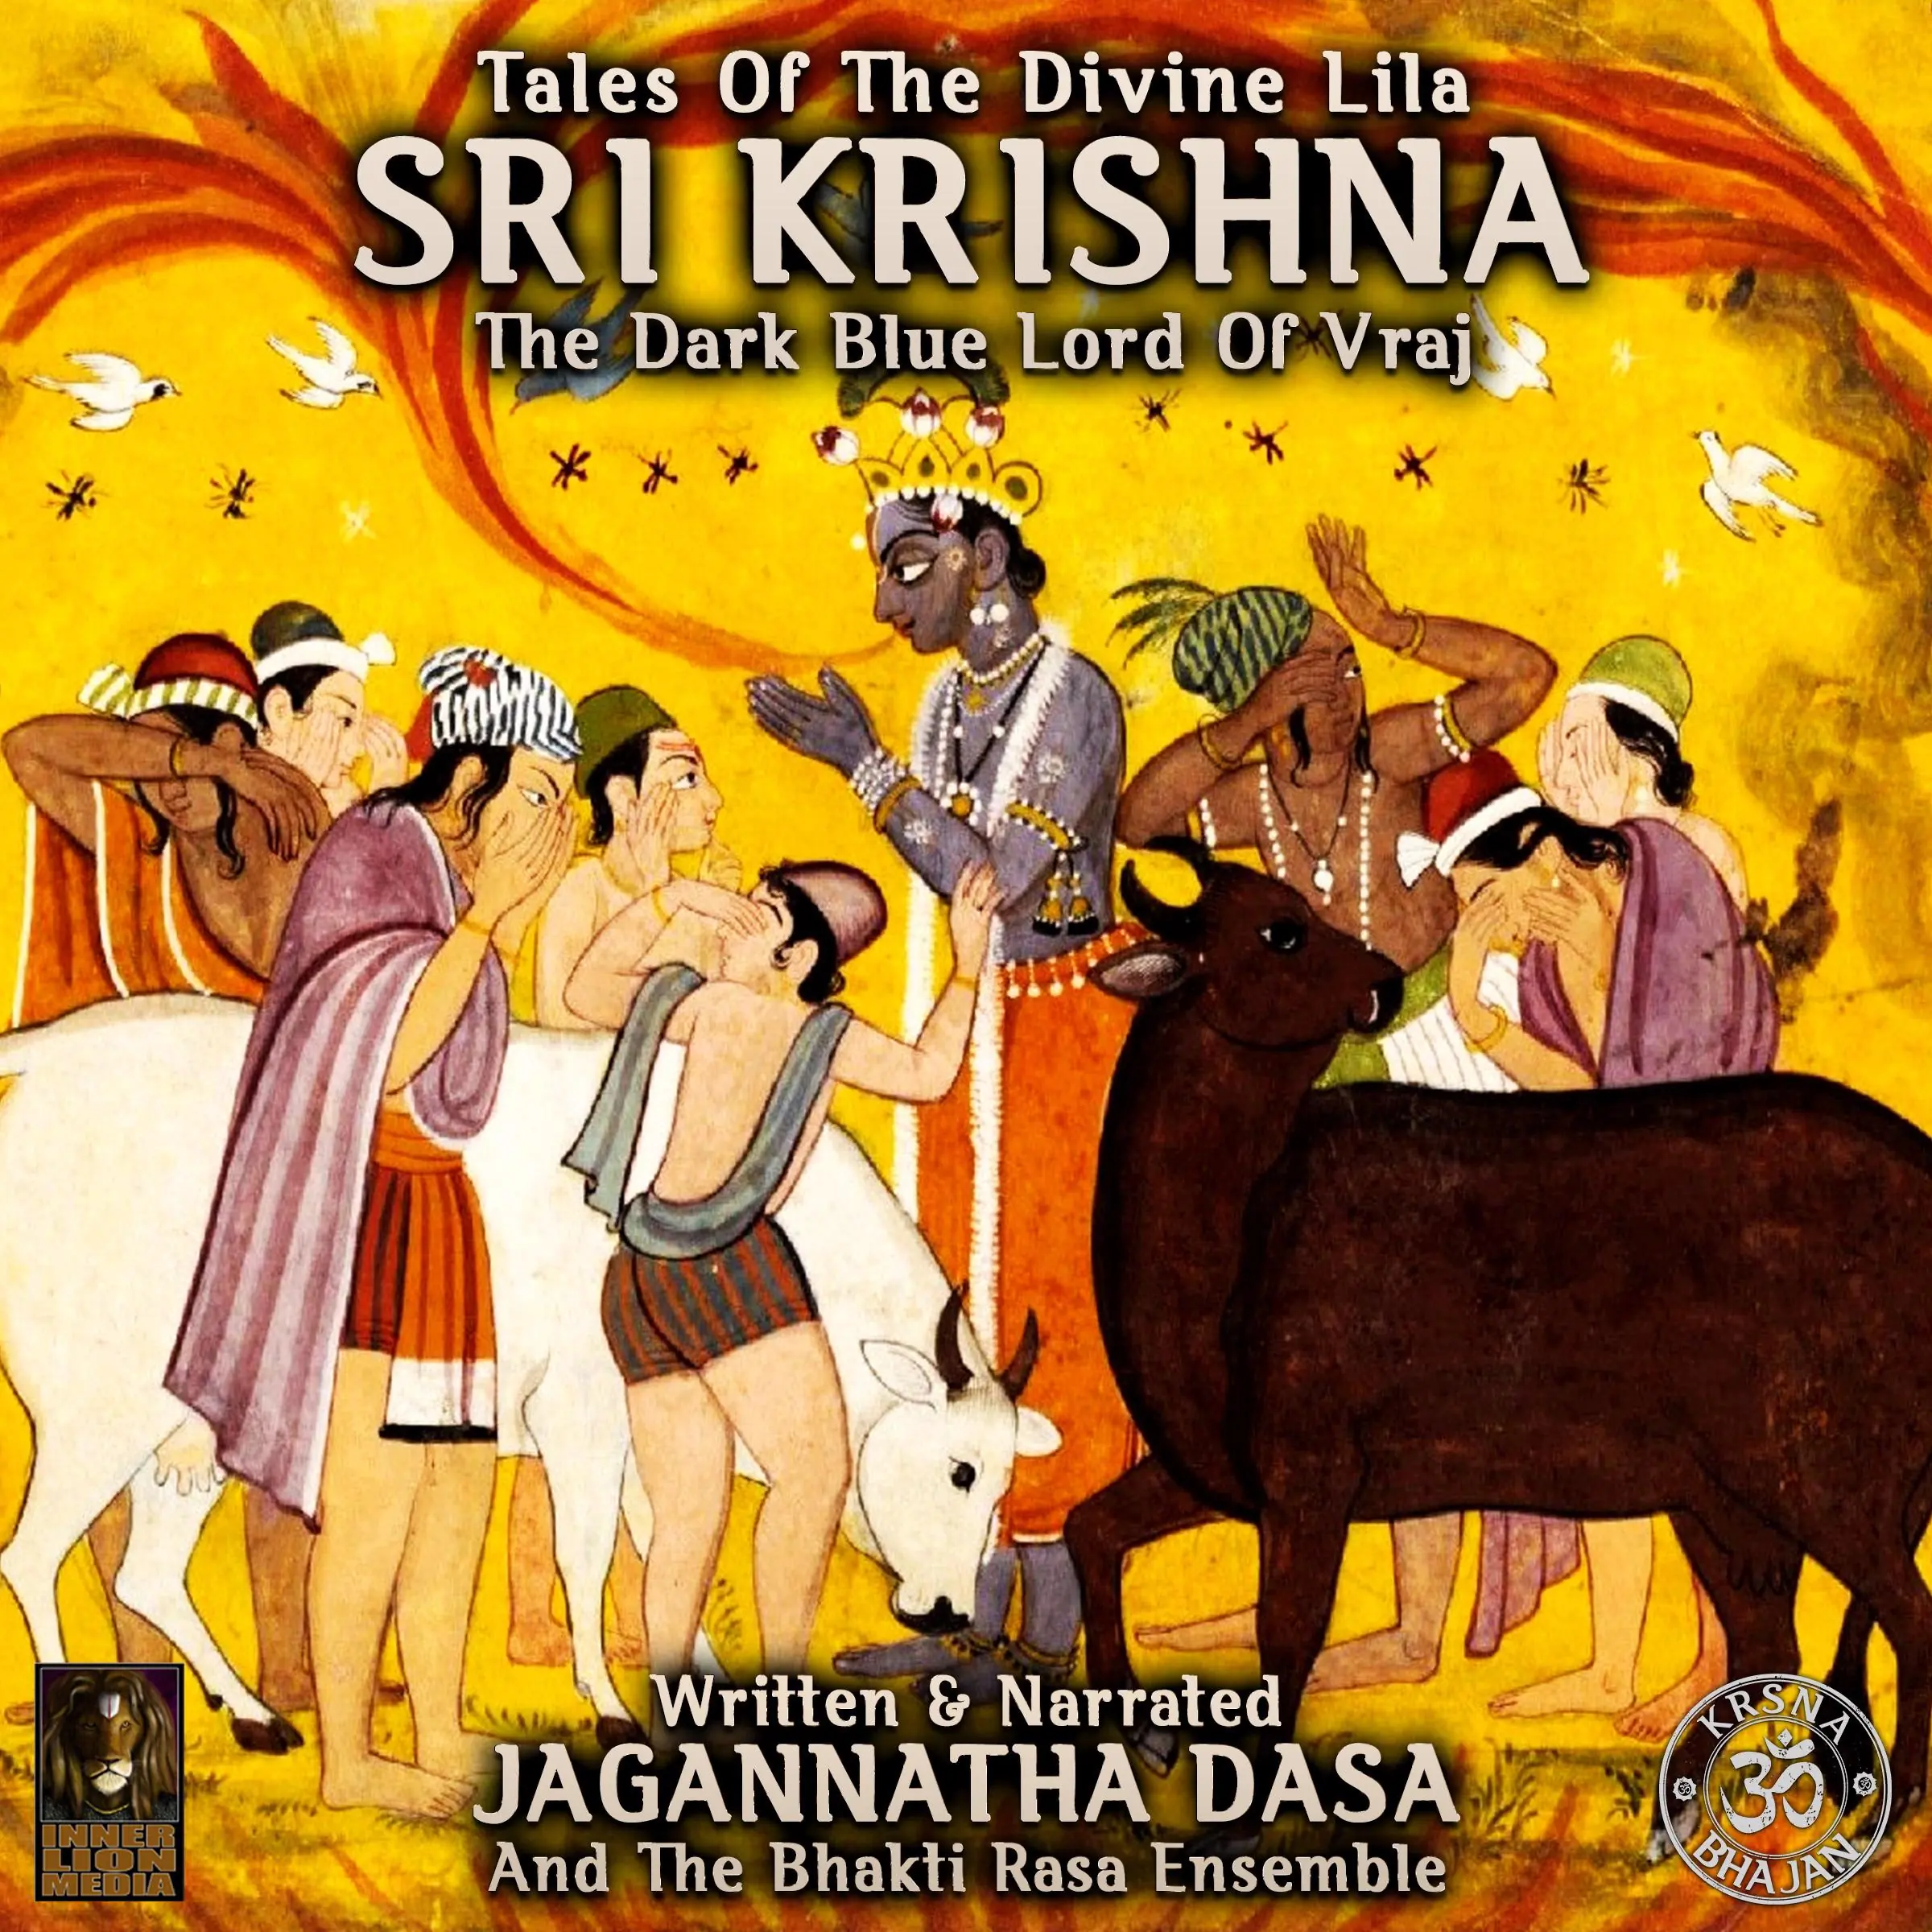 Tales Of The Divine Lila Sri Krishna - The Dark Blue Lord Of Vraj Audiobook by Jagannatha Dasa